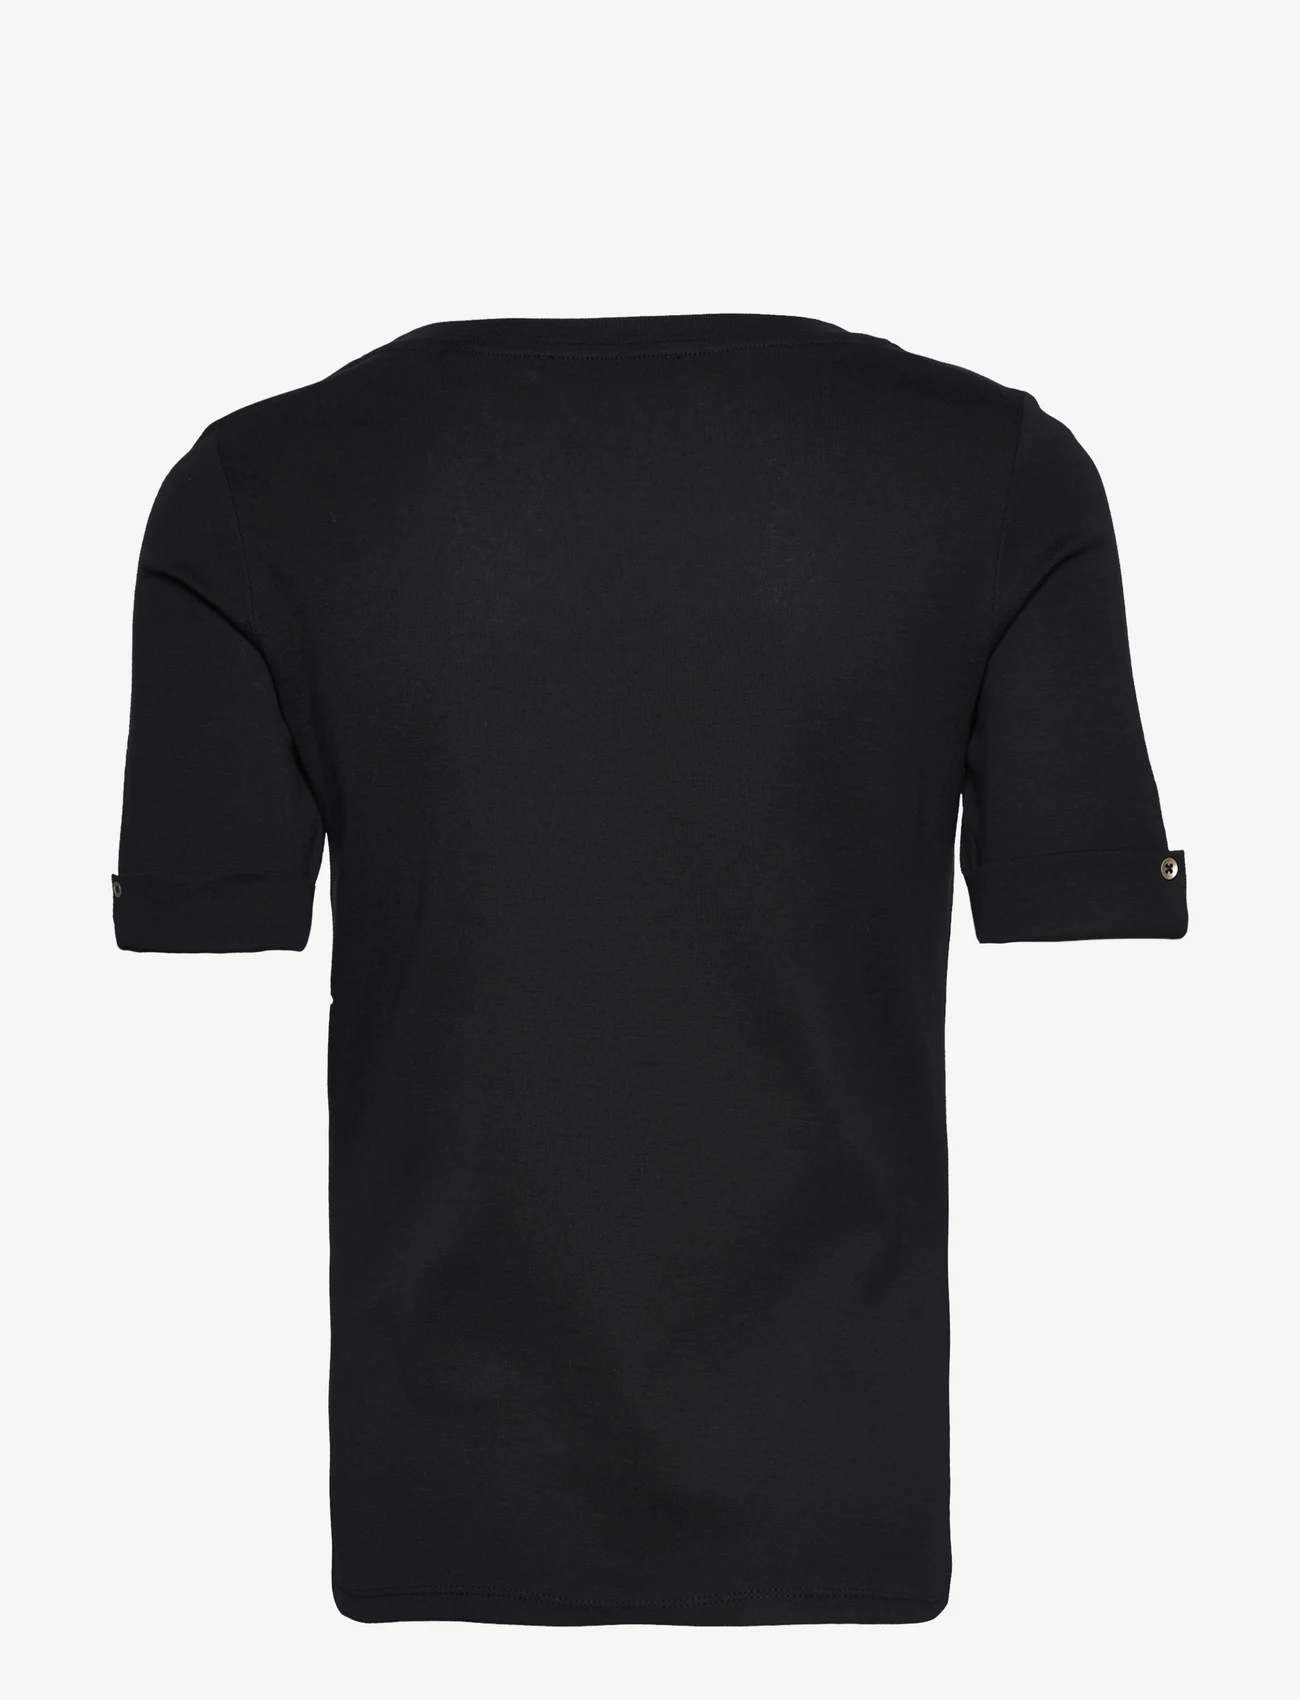 Esprit Collection - T-Shirts - t-shirt & tops - black - 1